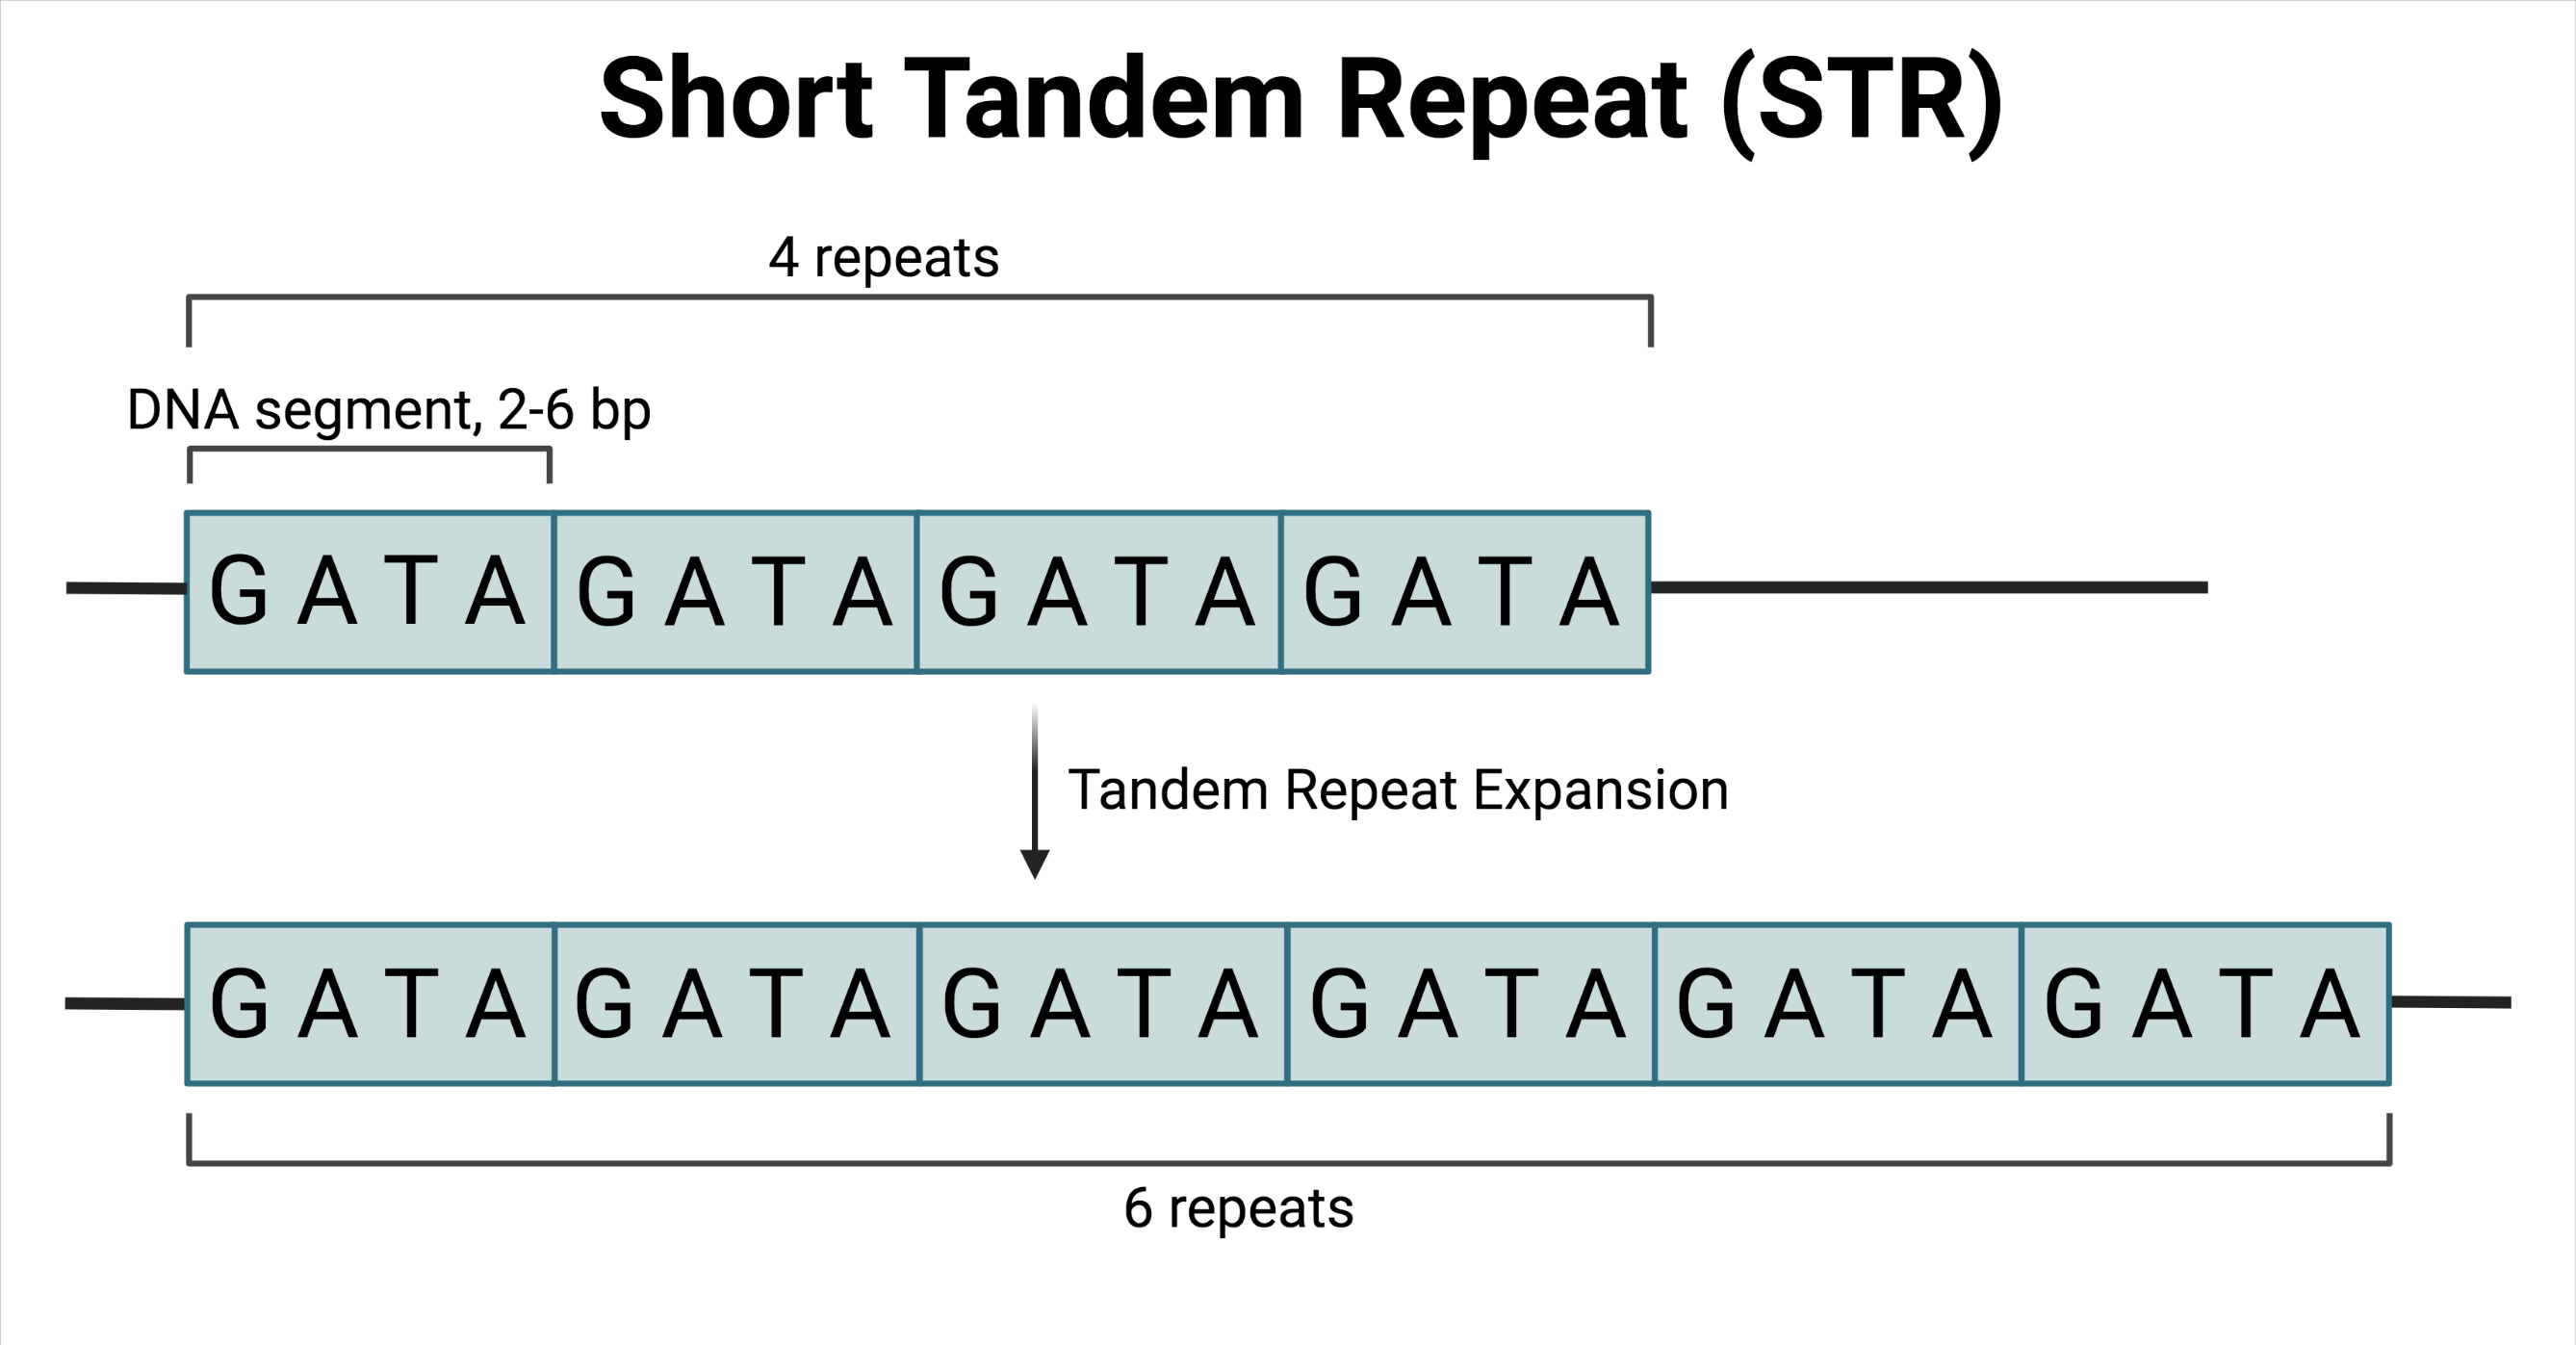 Schematic of Short Tandem Repeat (STR)